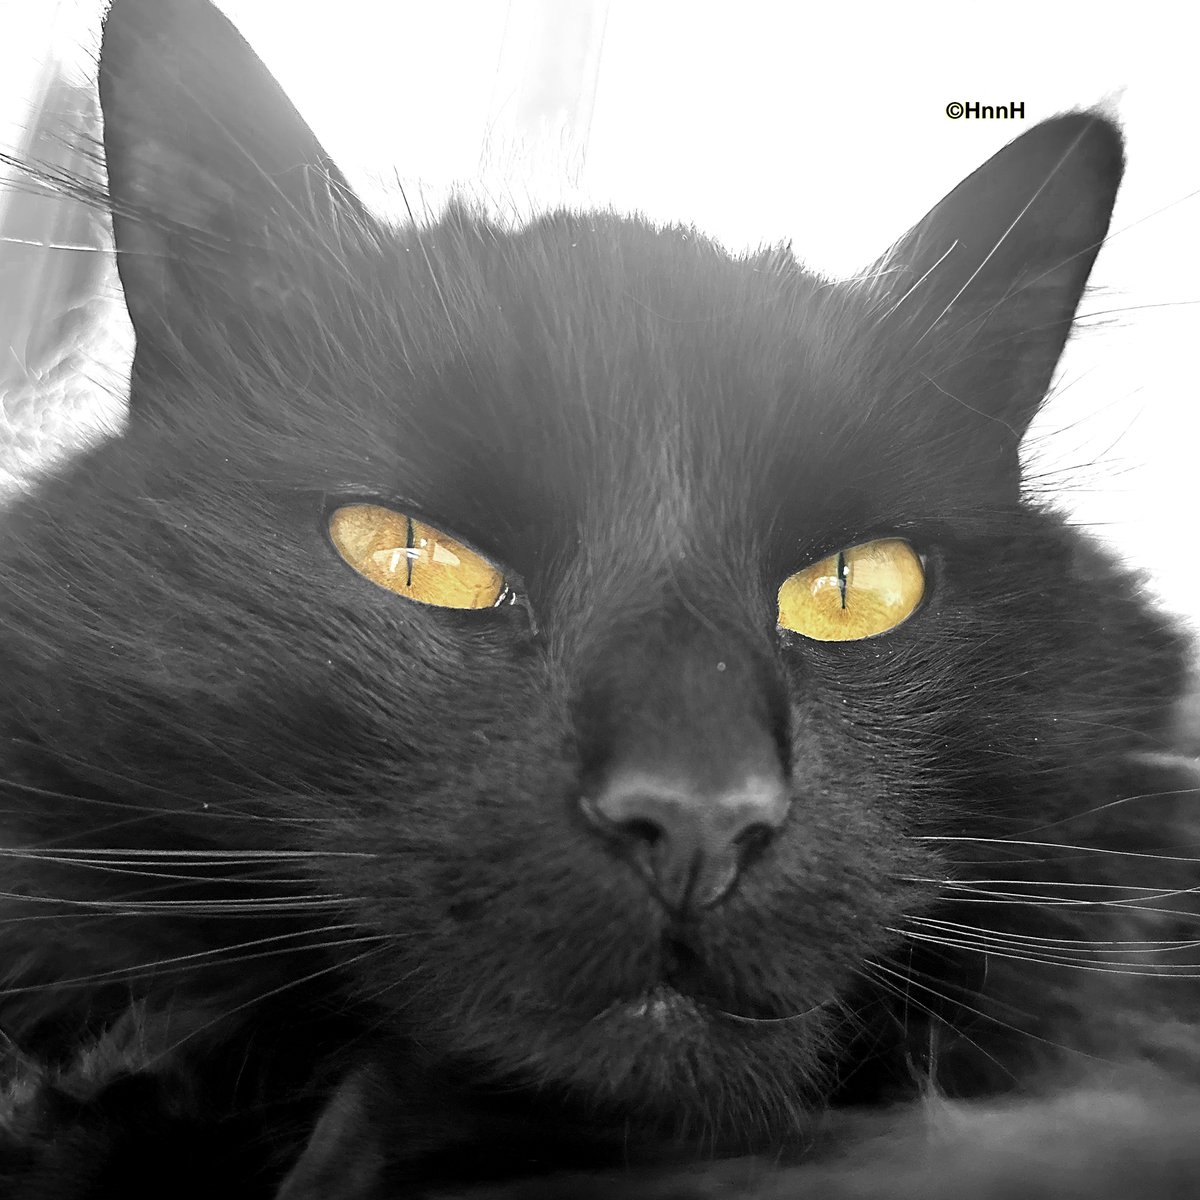 Don't piss off the #cat...

#Caturday #HappyCaturday #PetsAreFamily #CatMum #CatMom #CatsAreFamily #BlackCats #BlackCat #CatsLover #LoveBlackCats #Kitty #GatoNegro #ChatNoir #Cat #Cats #Kitten #Purrfect #Meow #Photography #BlackAndWhite #BnW #Fotografia #CatsOnX #CatsOfInstagram